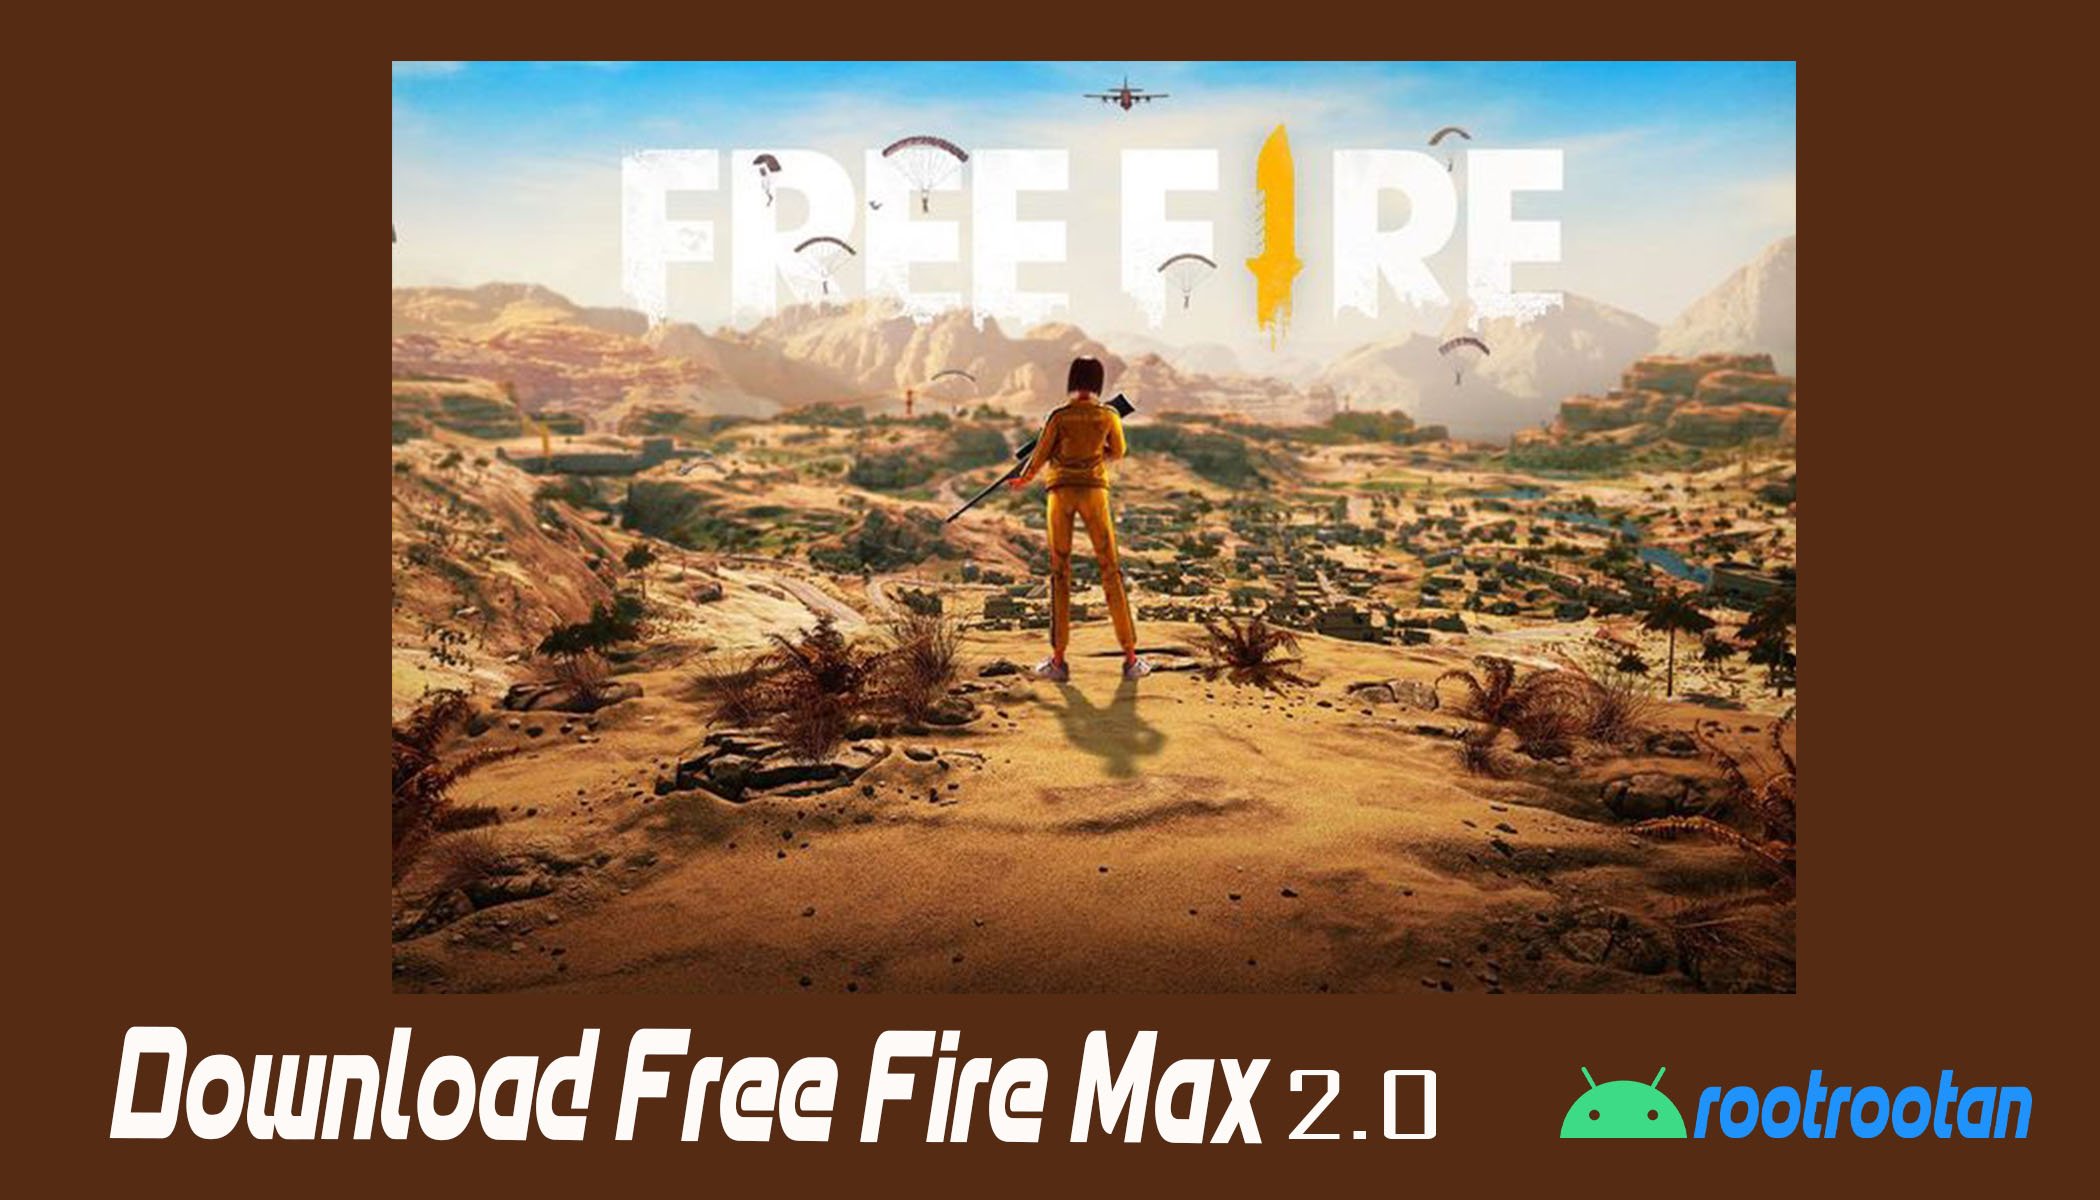 FREE FIRE MAX 2.0